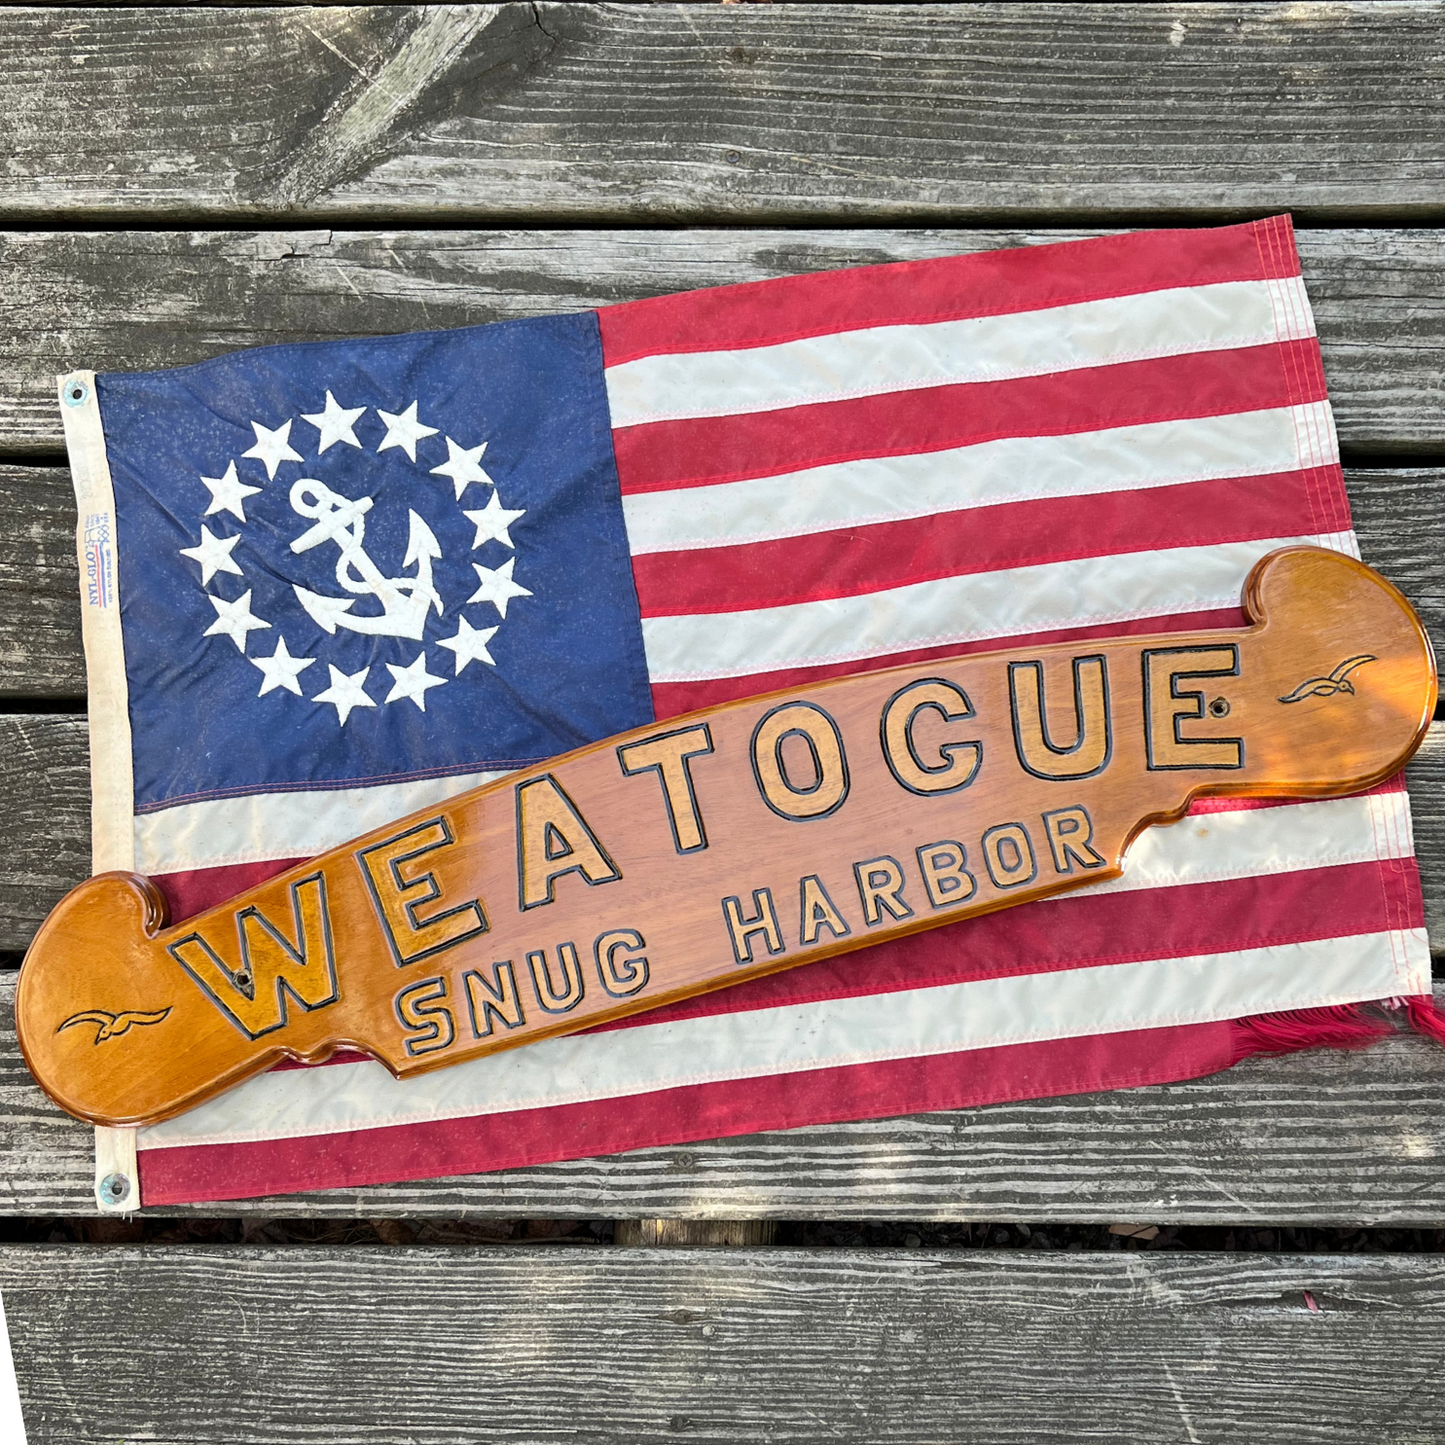 salvaged wooden Weatogue quarterboard